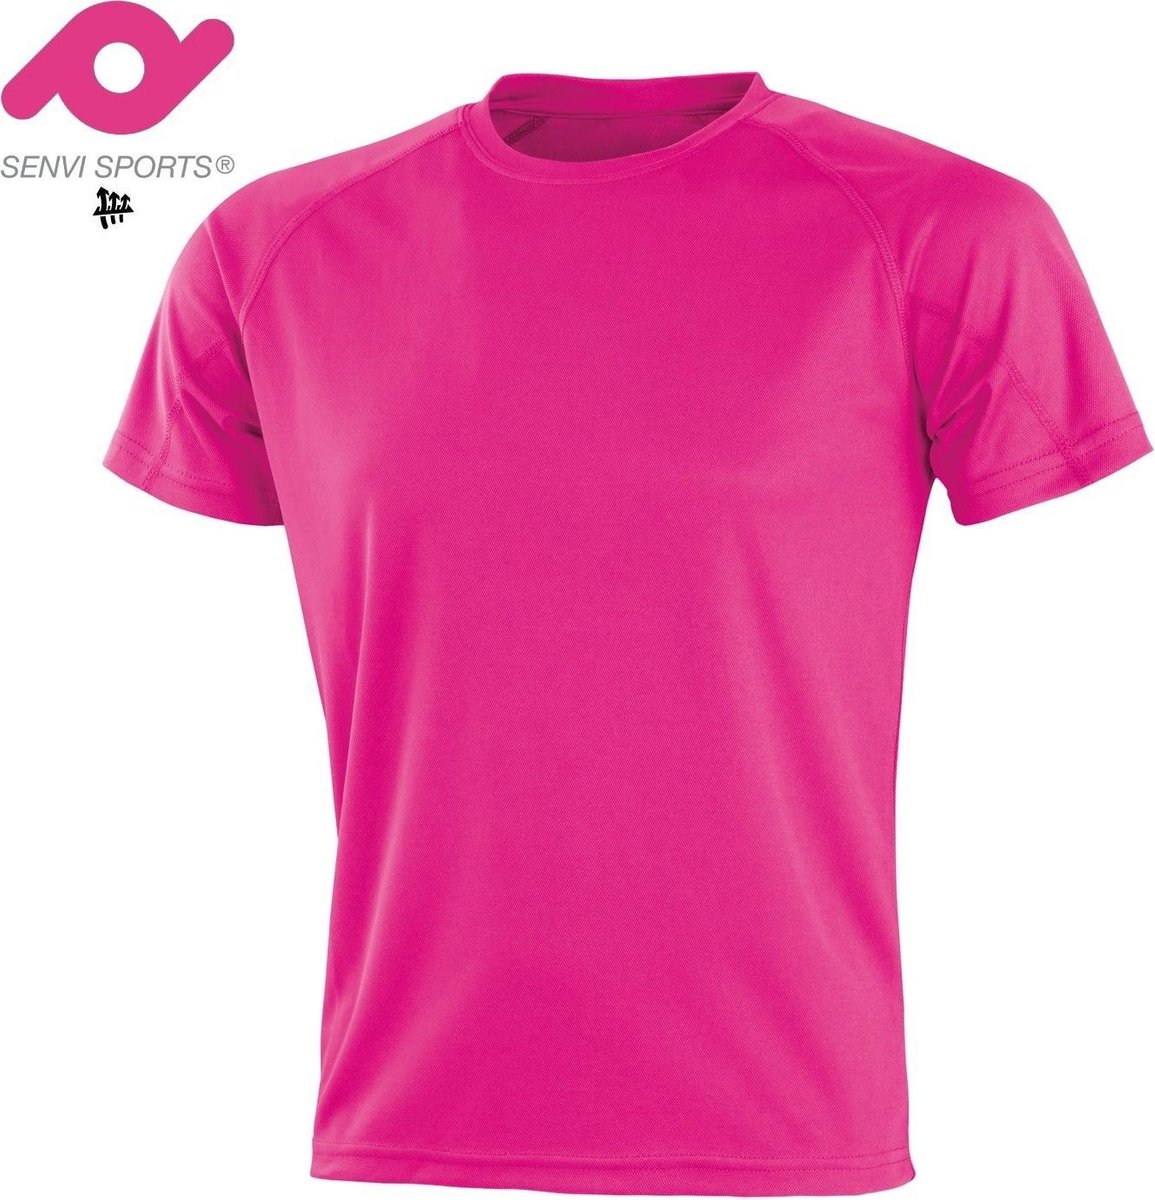 Senvi Sports Performance T-Shirt- Roze - XS - Unisex